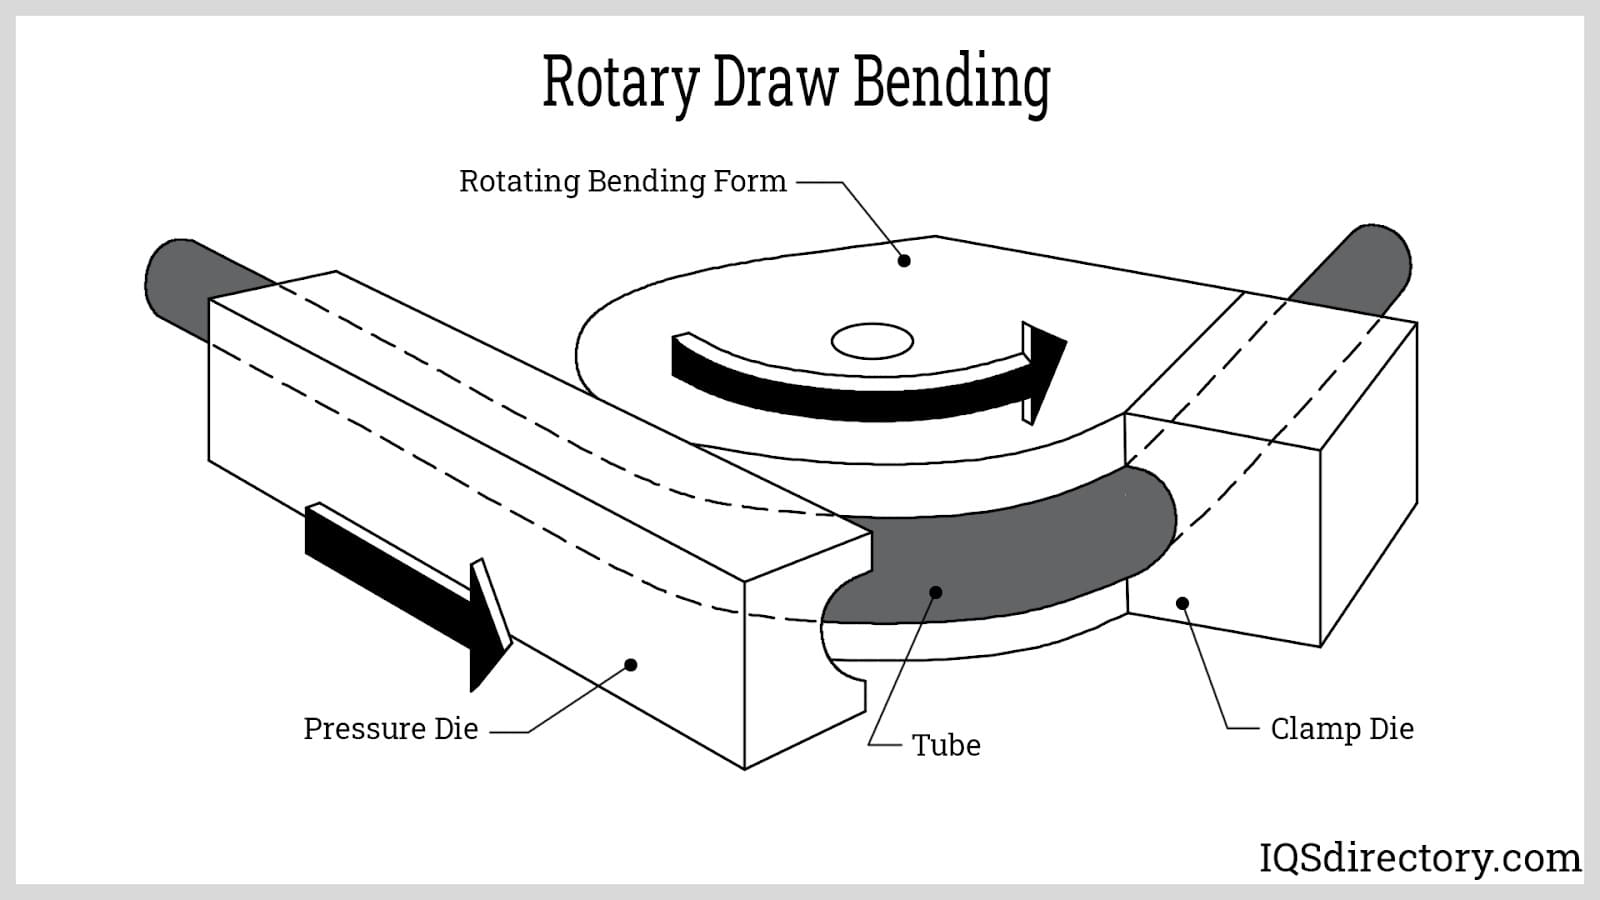 Rotary Draw Bending